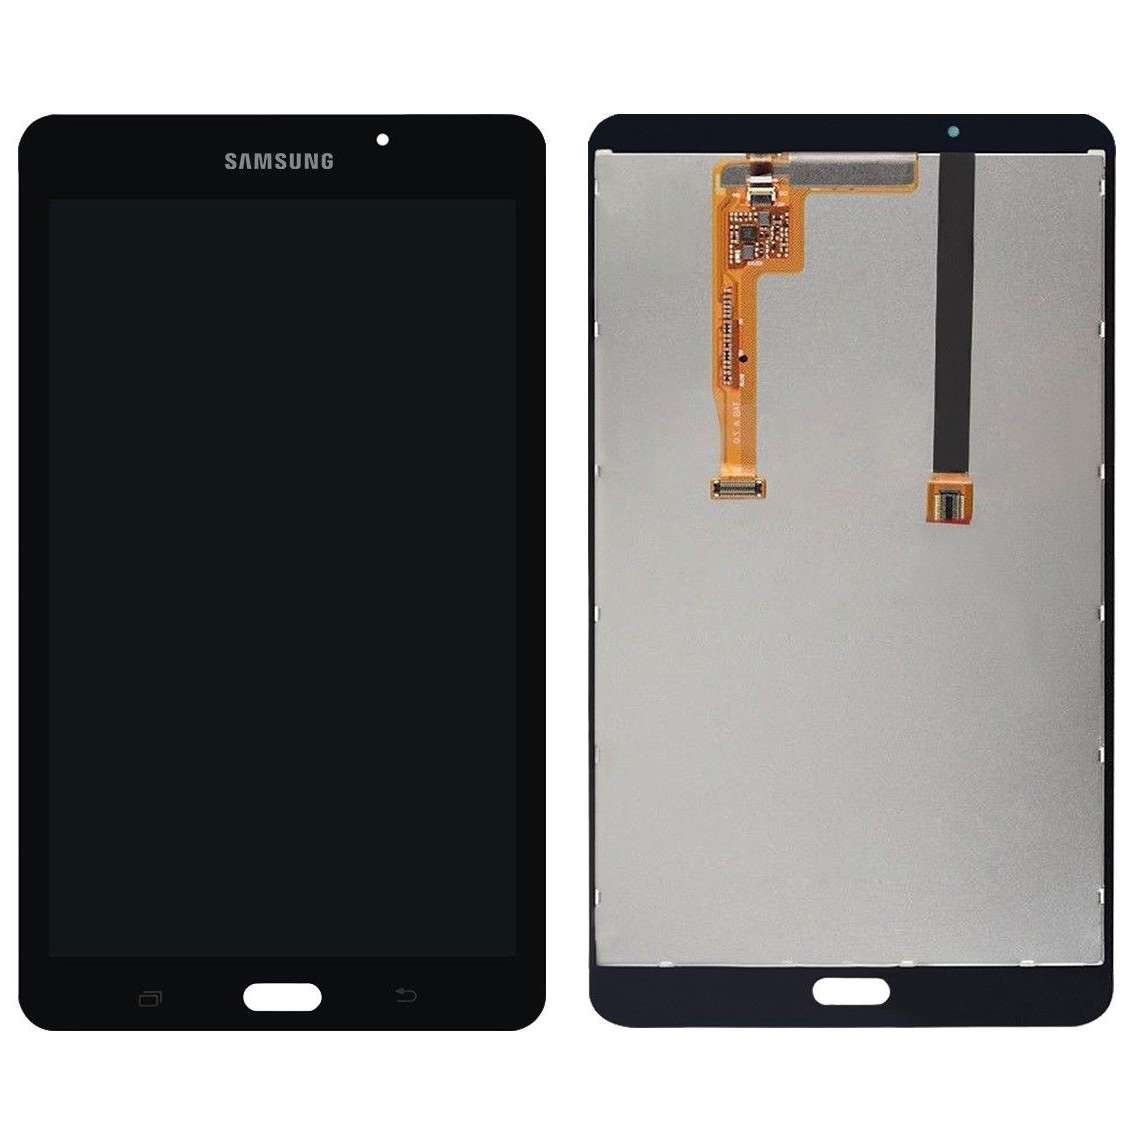 Ansamblu LCD Display Touchscreen Samsung Galaxy Tab A 7.0 2016 T280 Negru powerlaptop.ro powerlaptop.ro